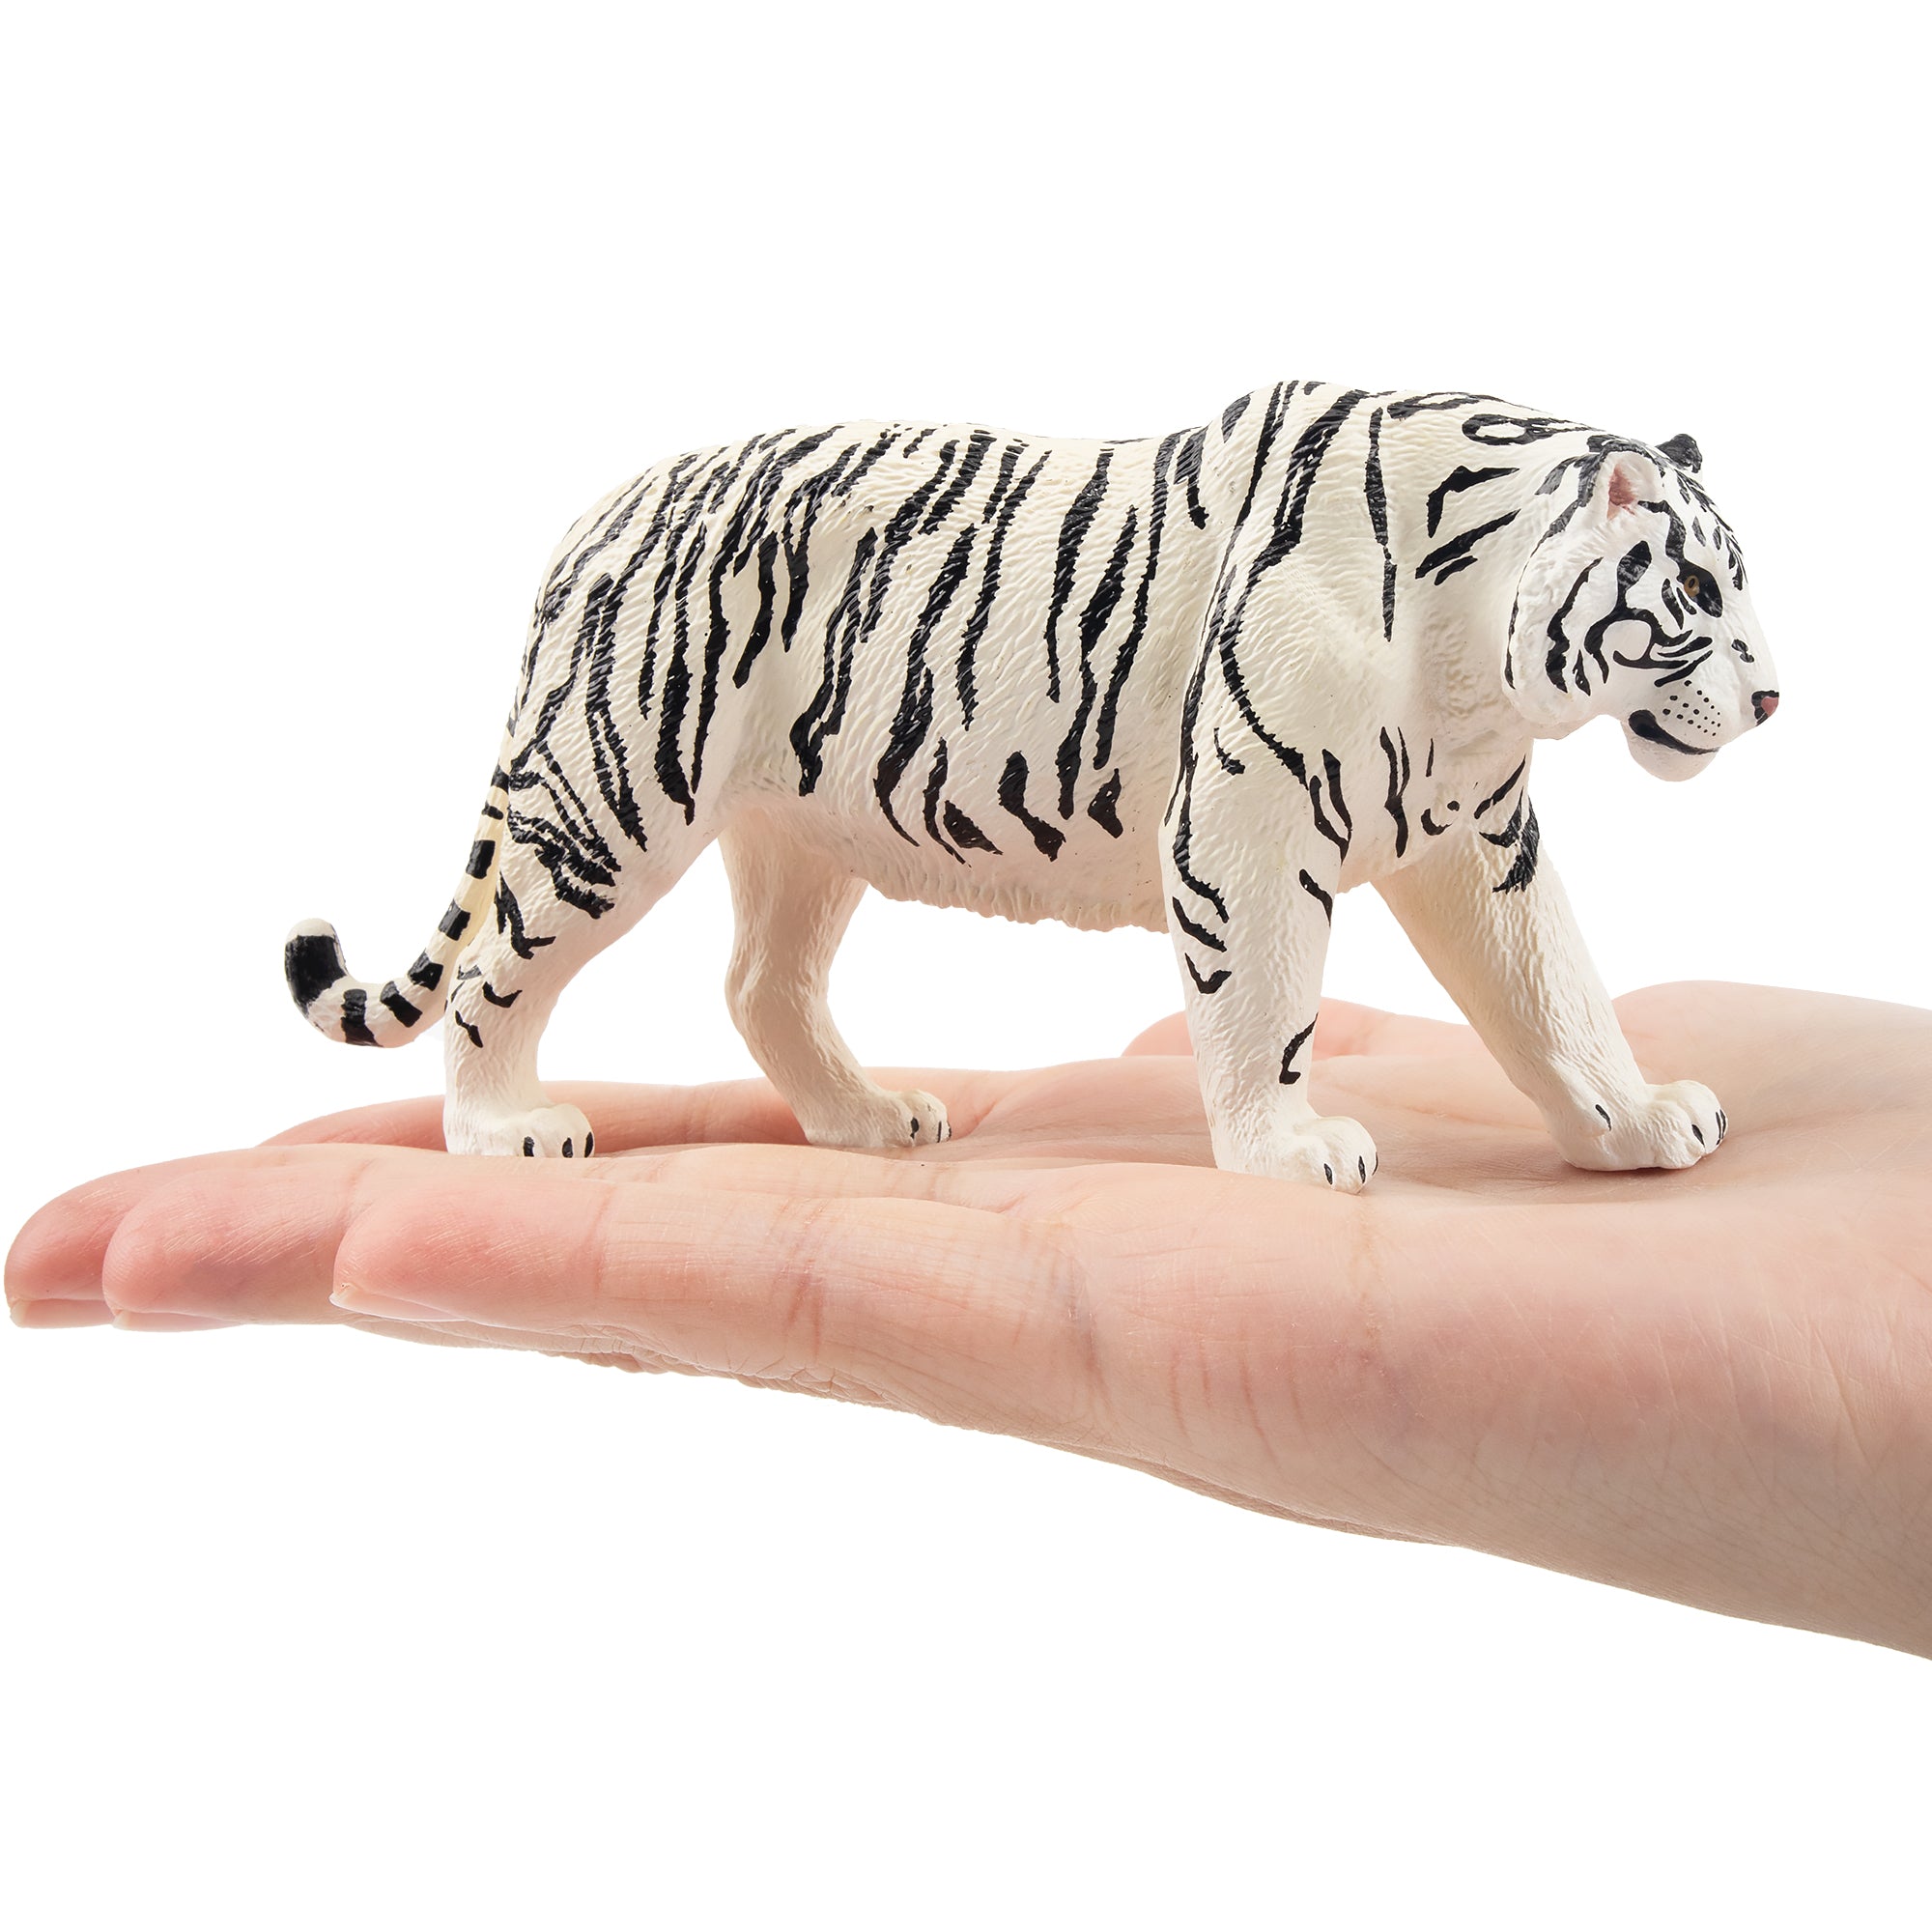 Toymany White Tiger Figurine Toy-on hand